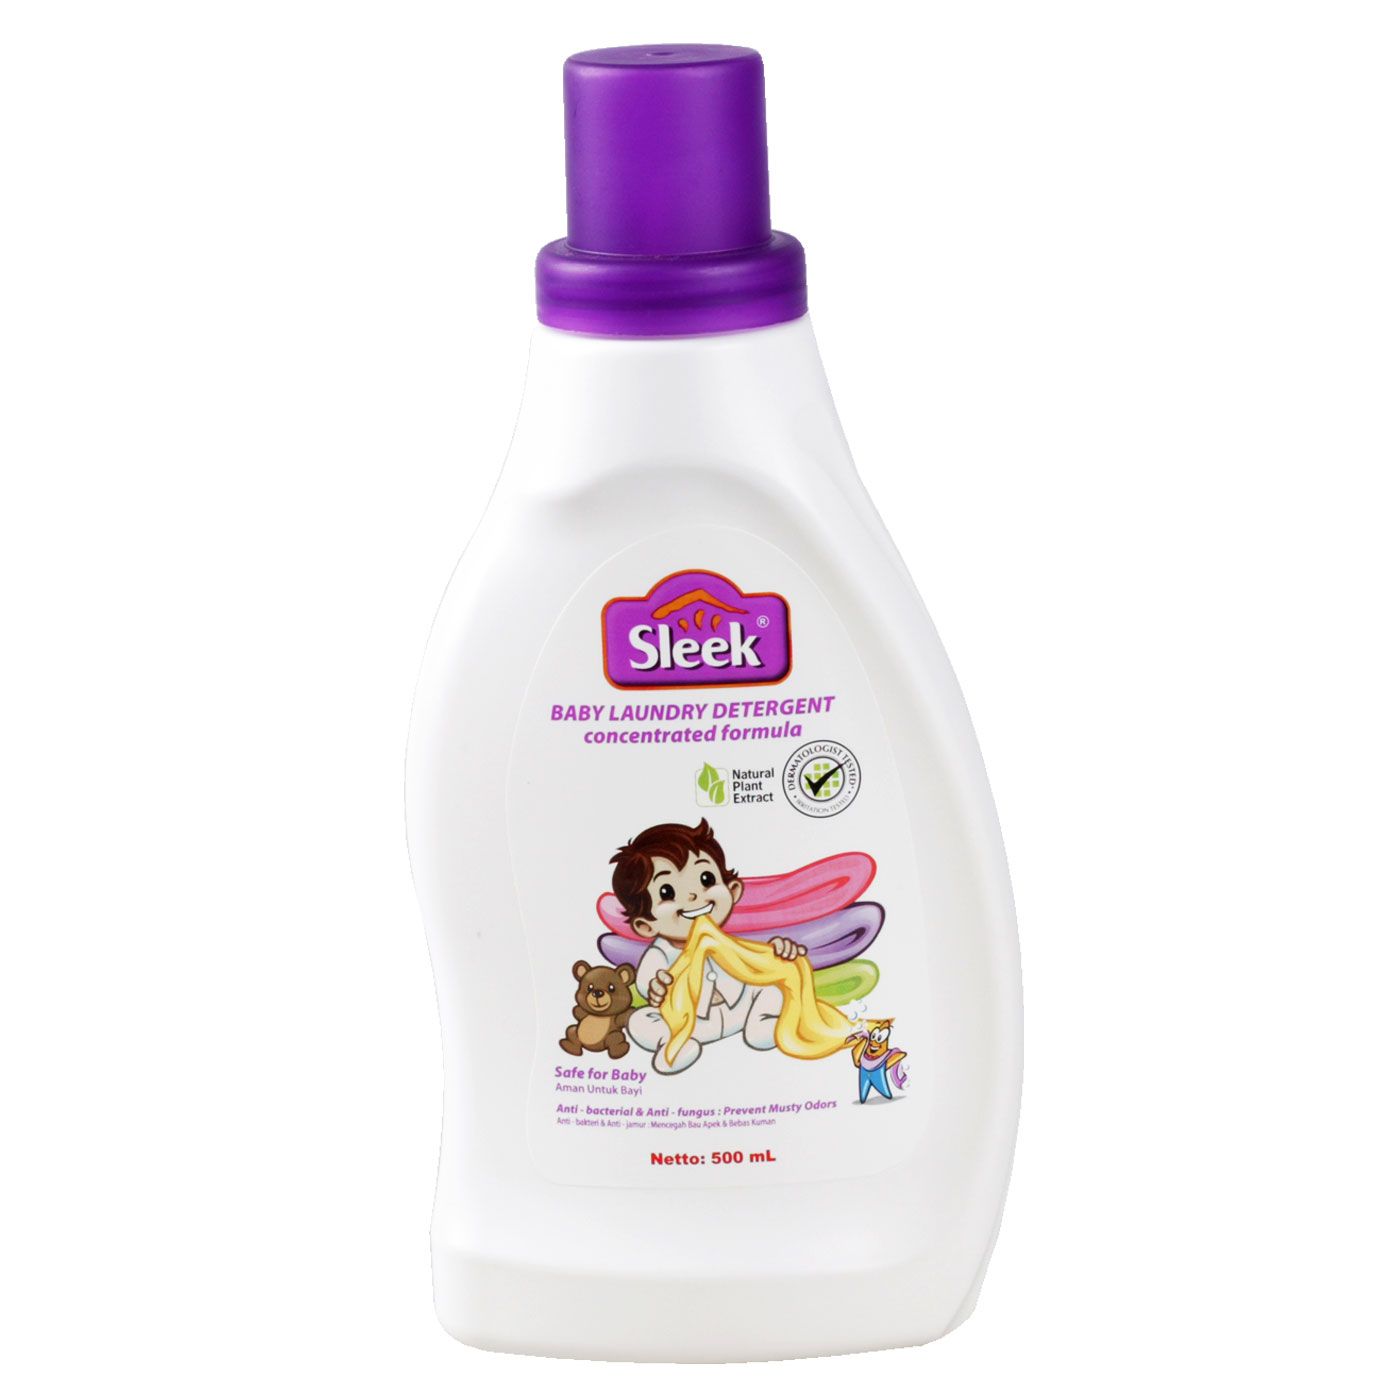 Sleek Baby Laundry Detergent Bottle 500ml - 1